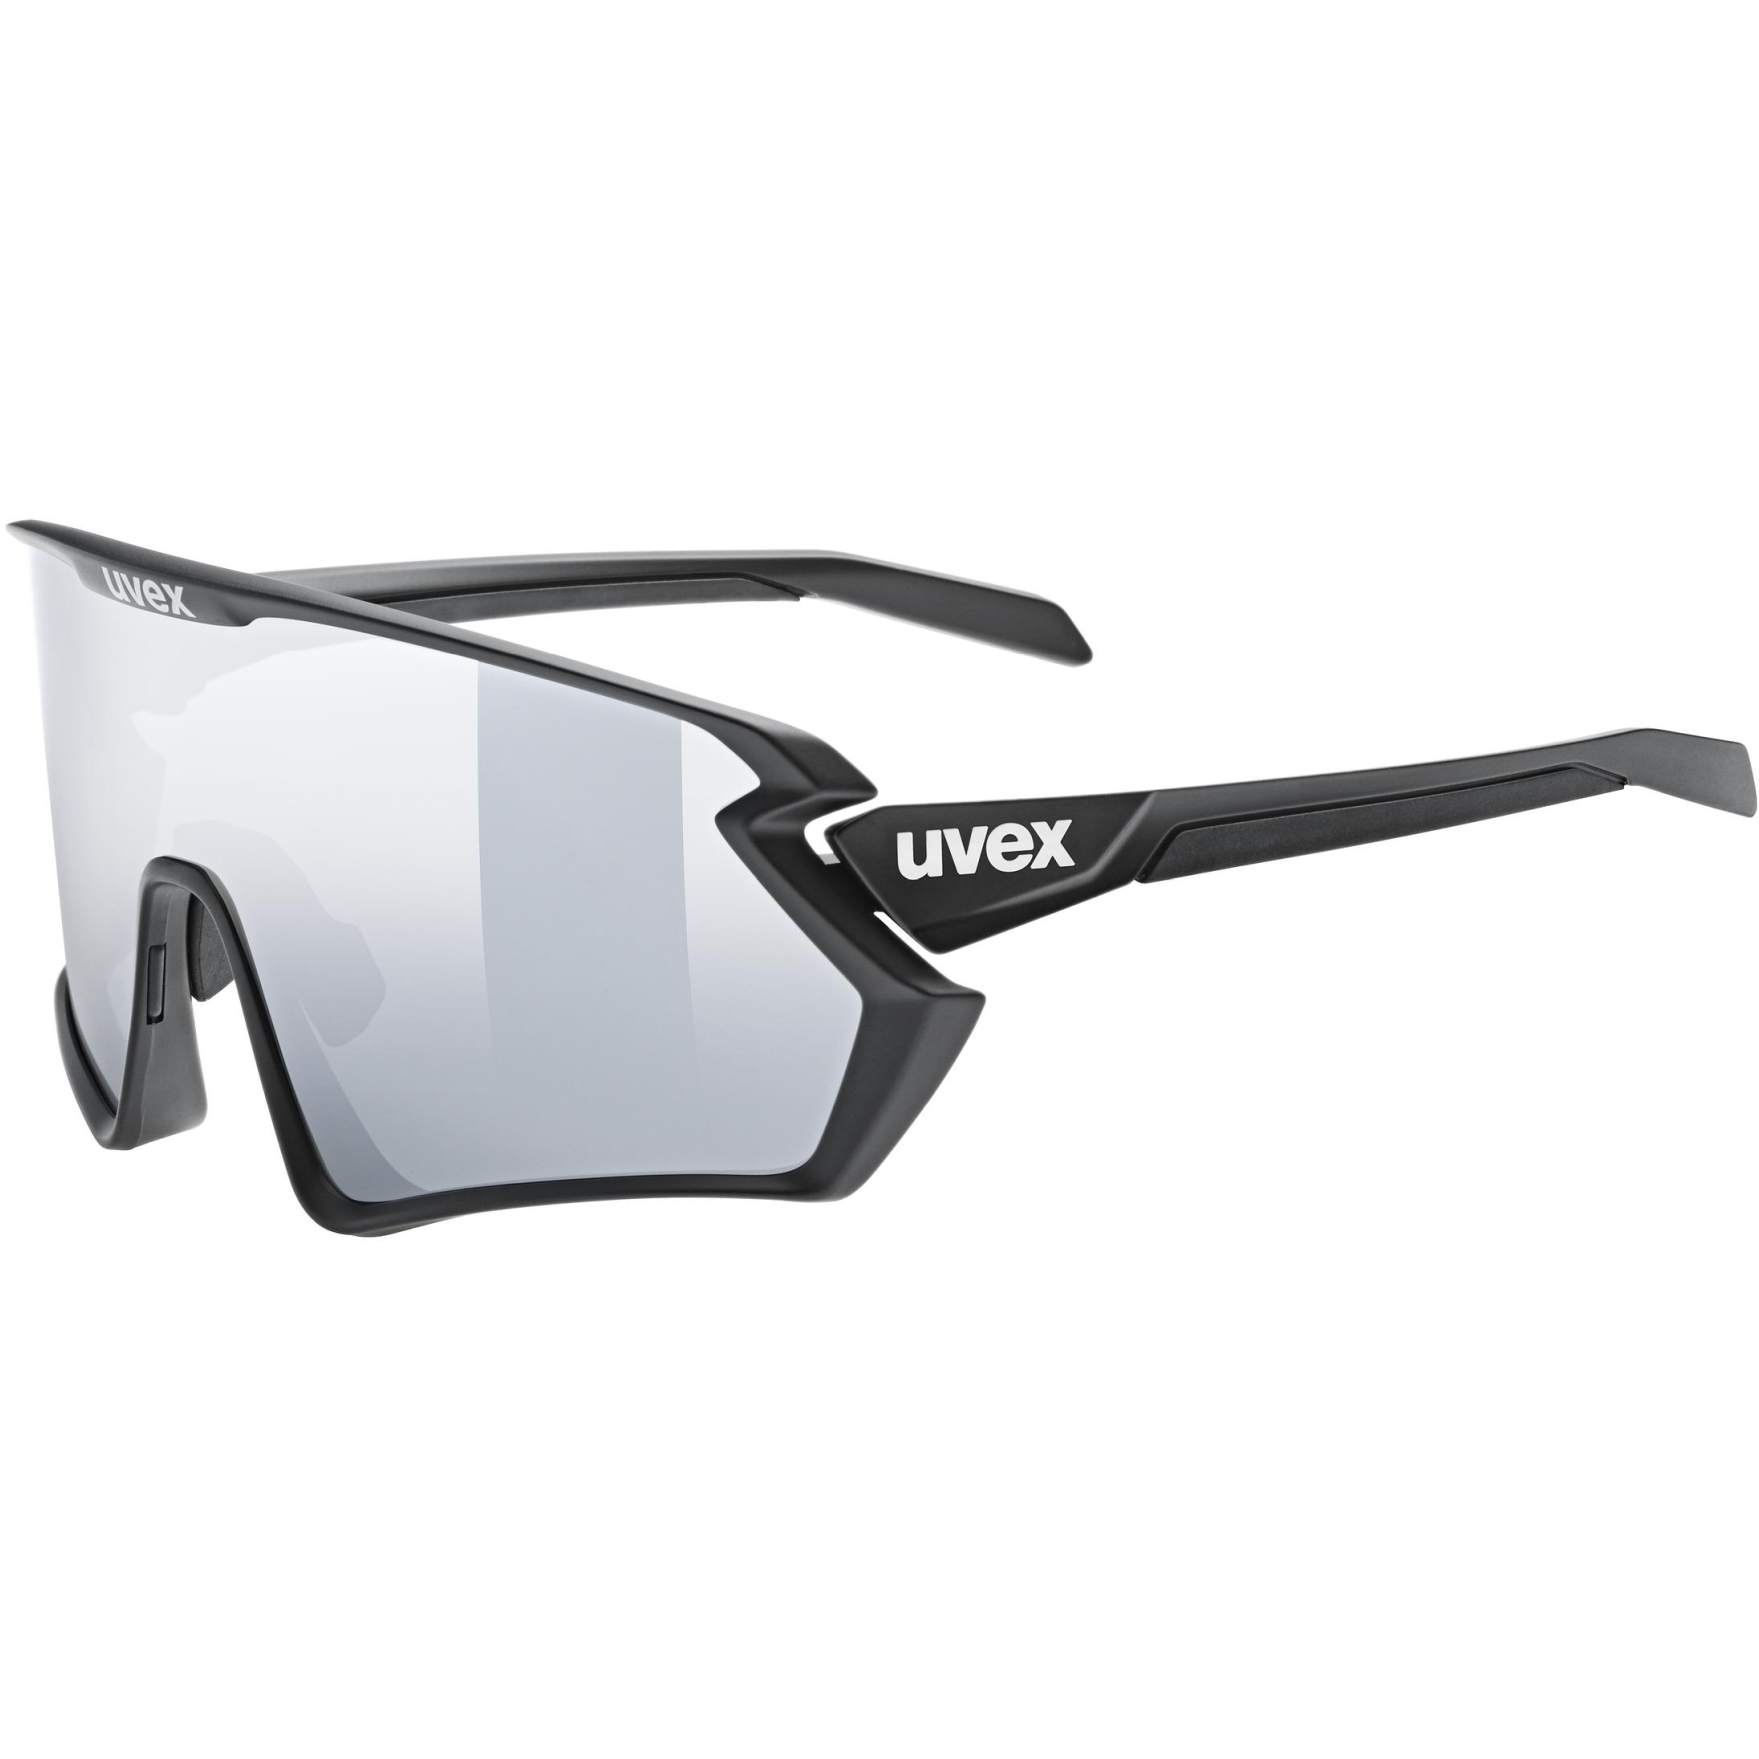 Productfoto van Uvex sportstyle 231 2.0 Set Bril - black matt/supravision mirror silver + clear